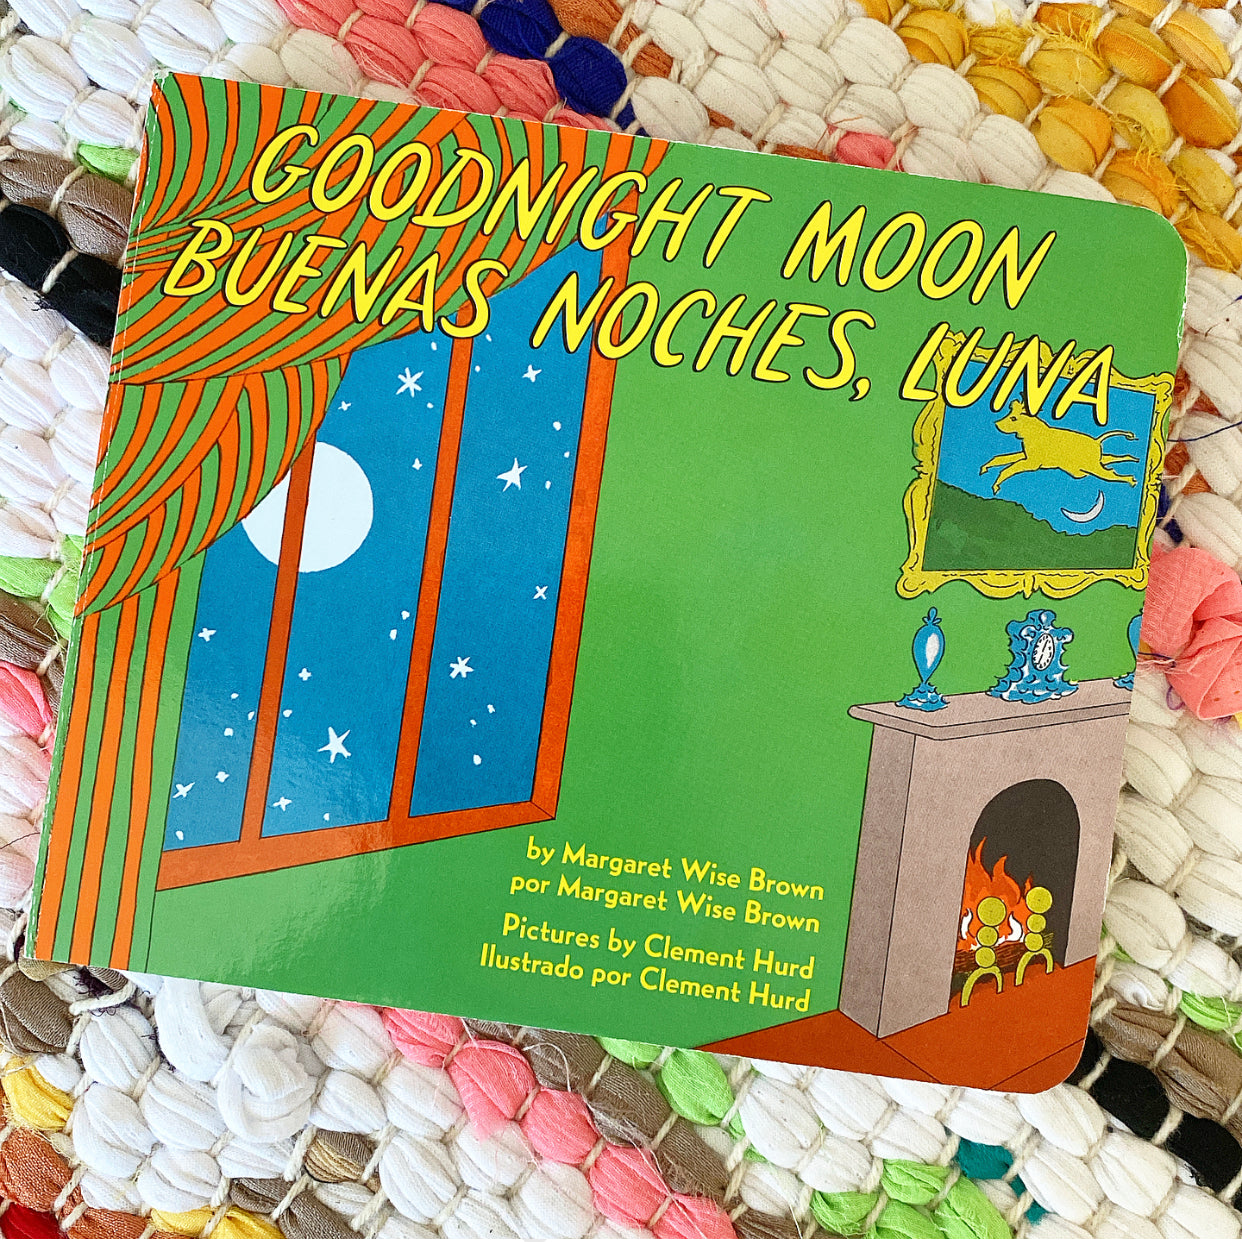 Buenas Noches, Luna [Goodnight Moon] by Margaret Wise Brown